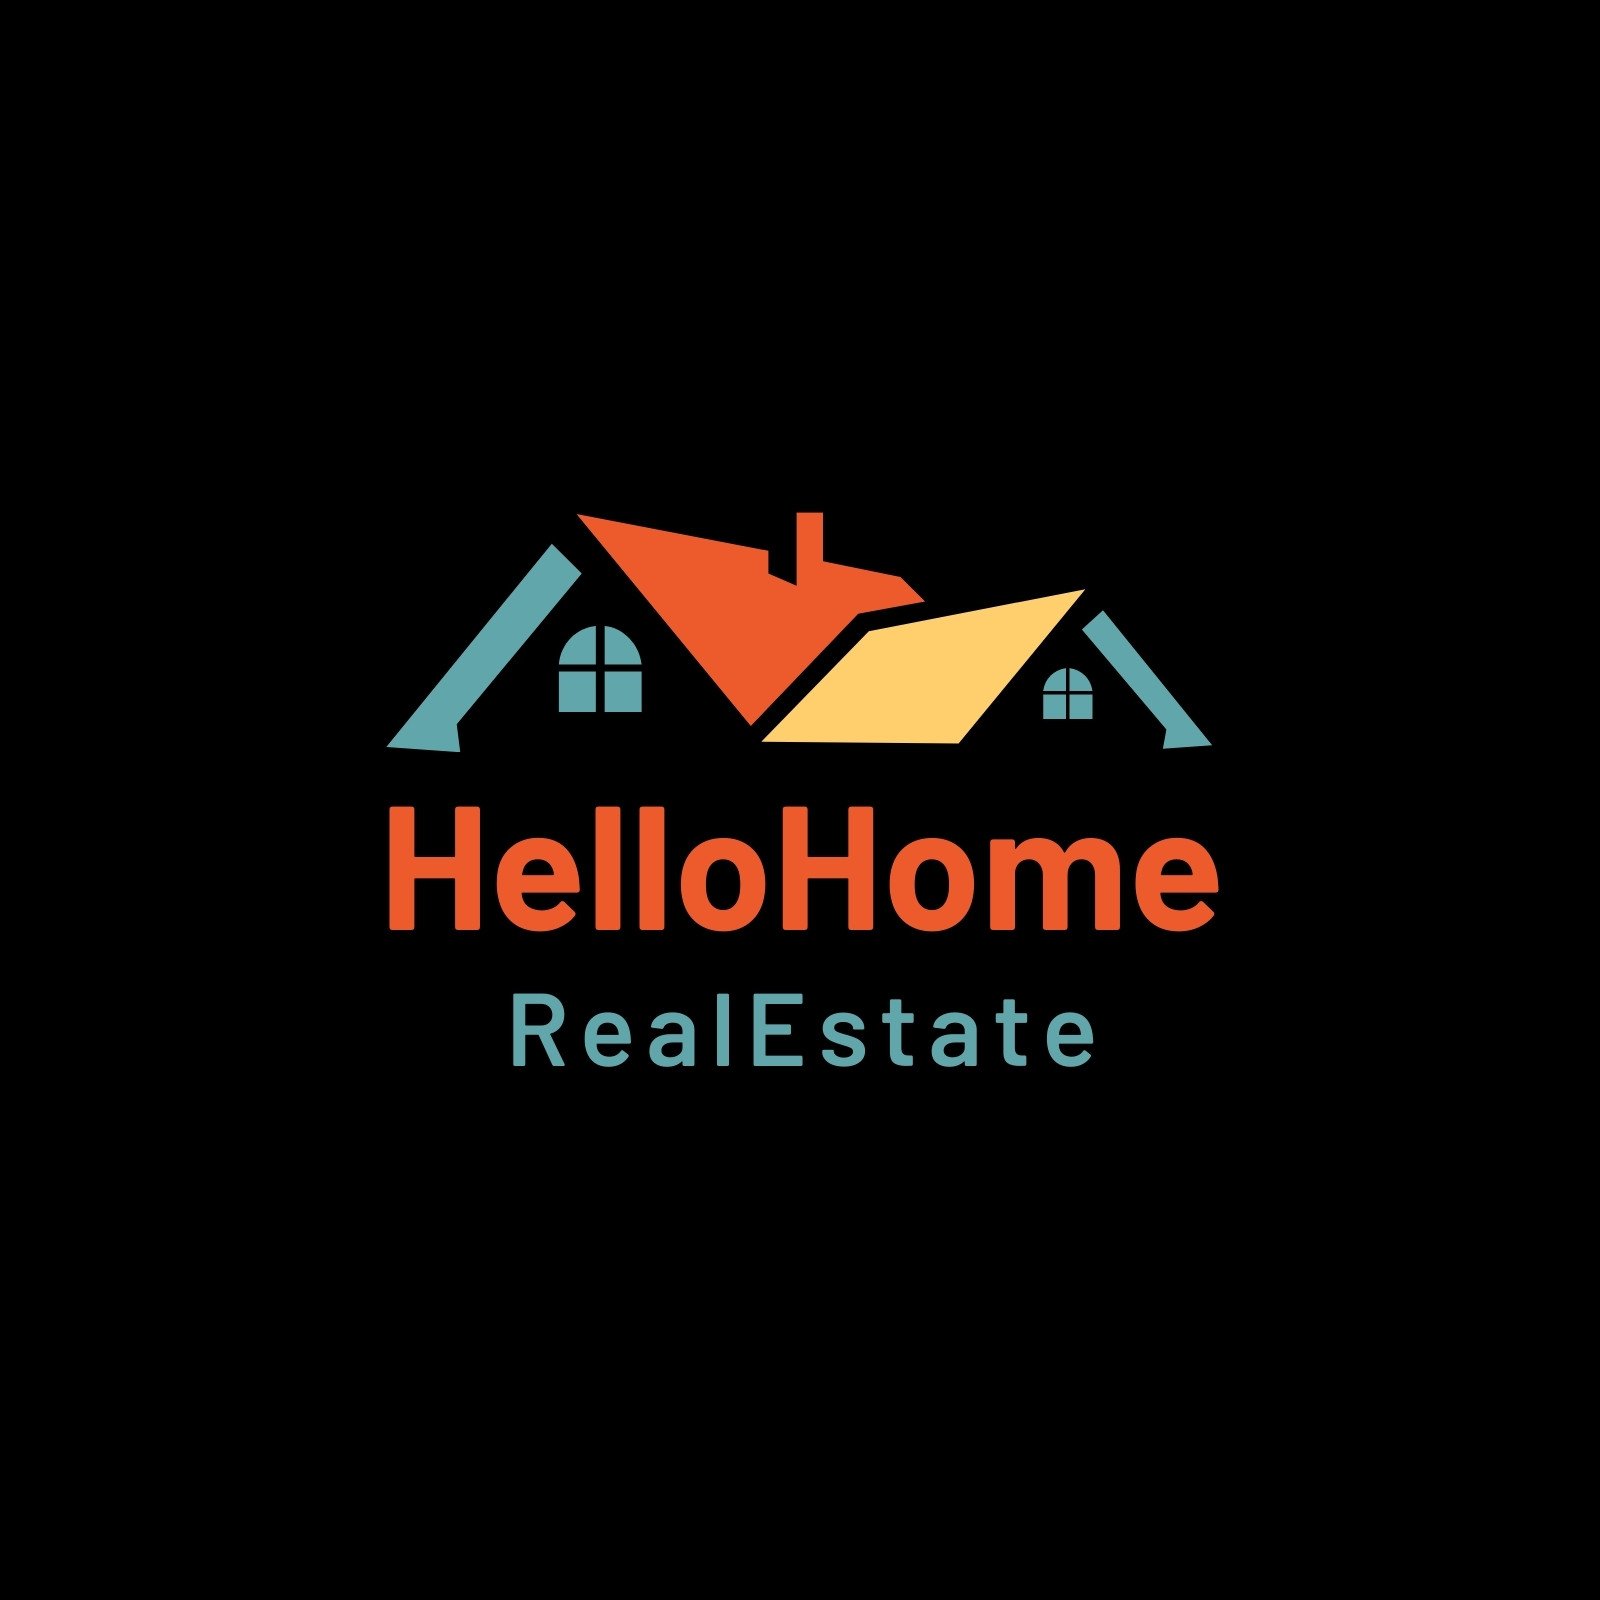 real estate houses logo